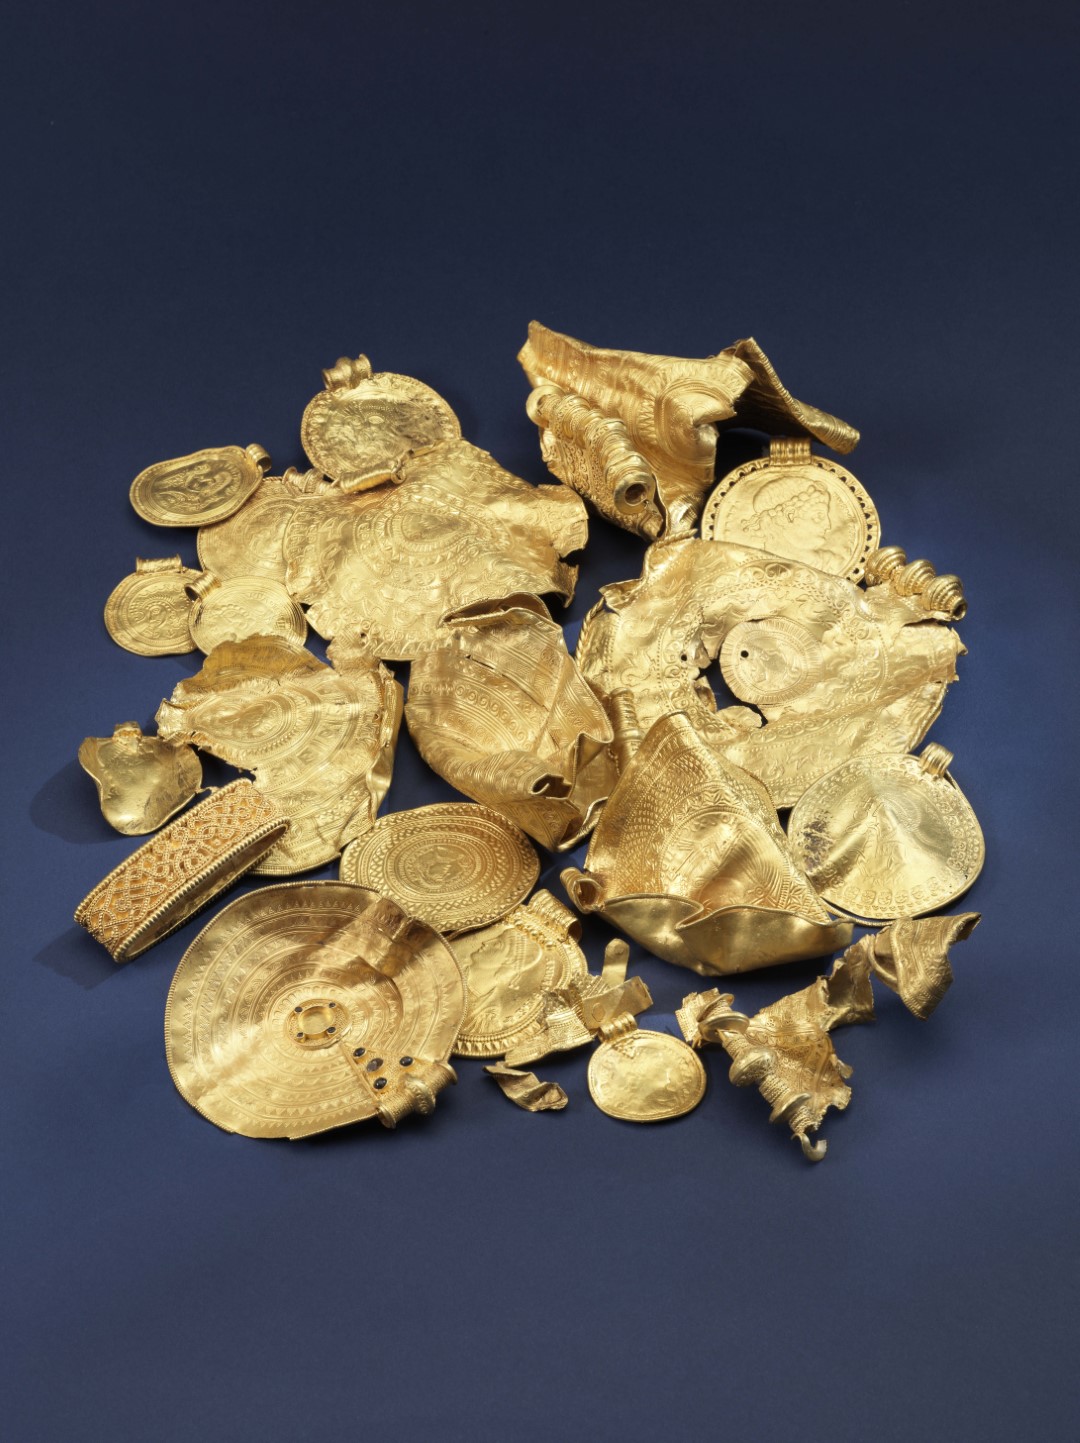 Detector study of Roman gold treasure discovery reveals network of European elites